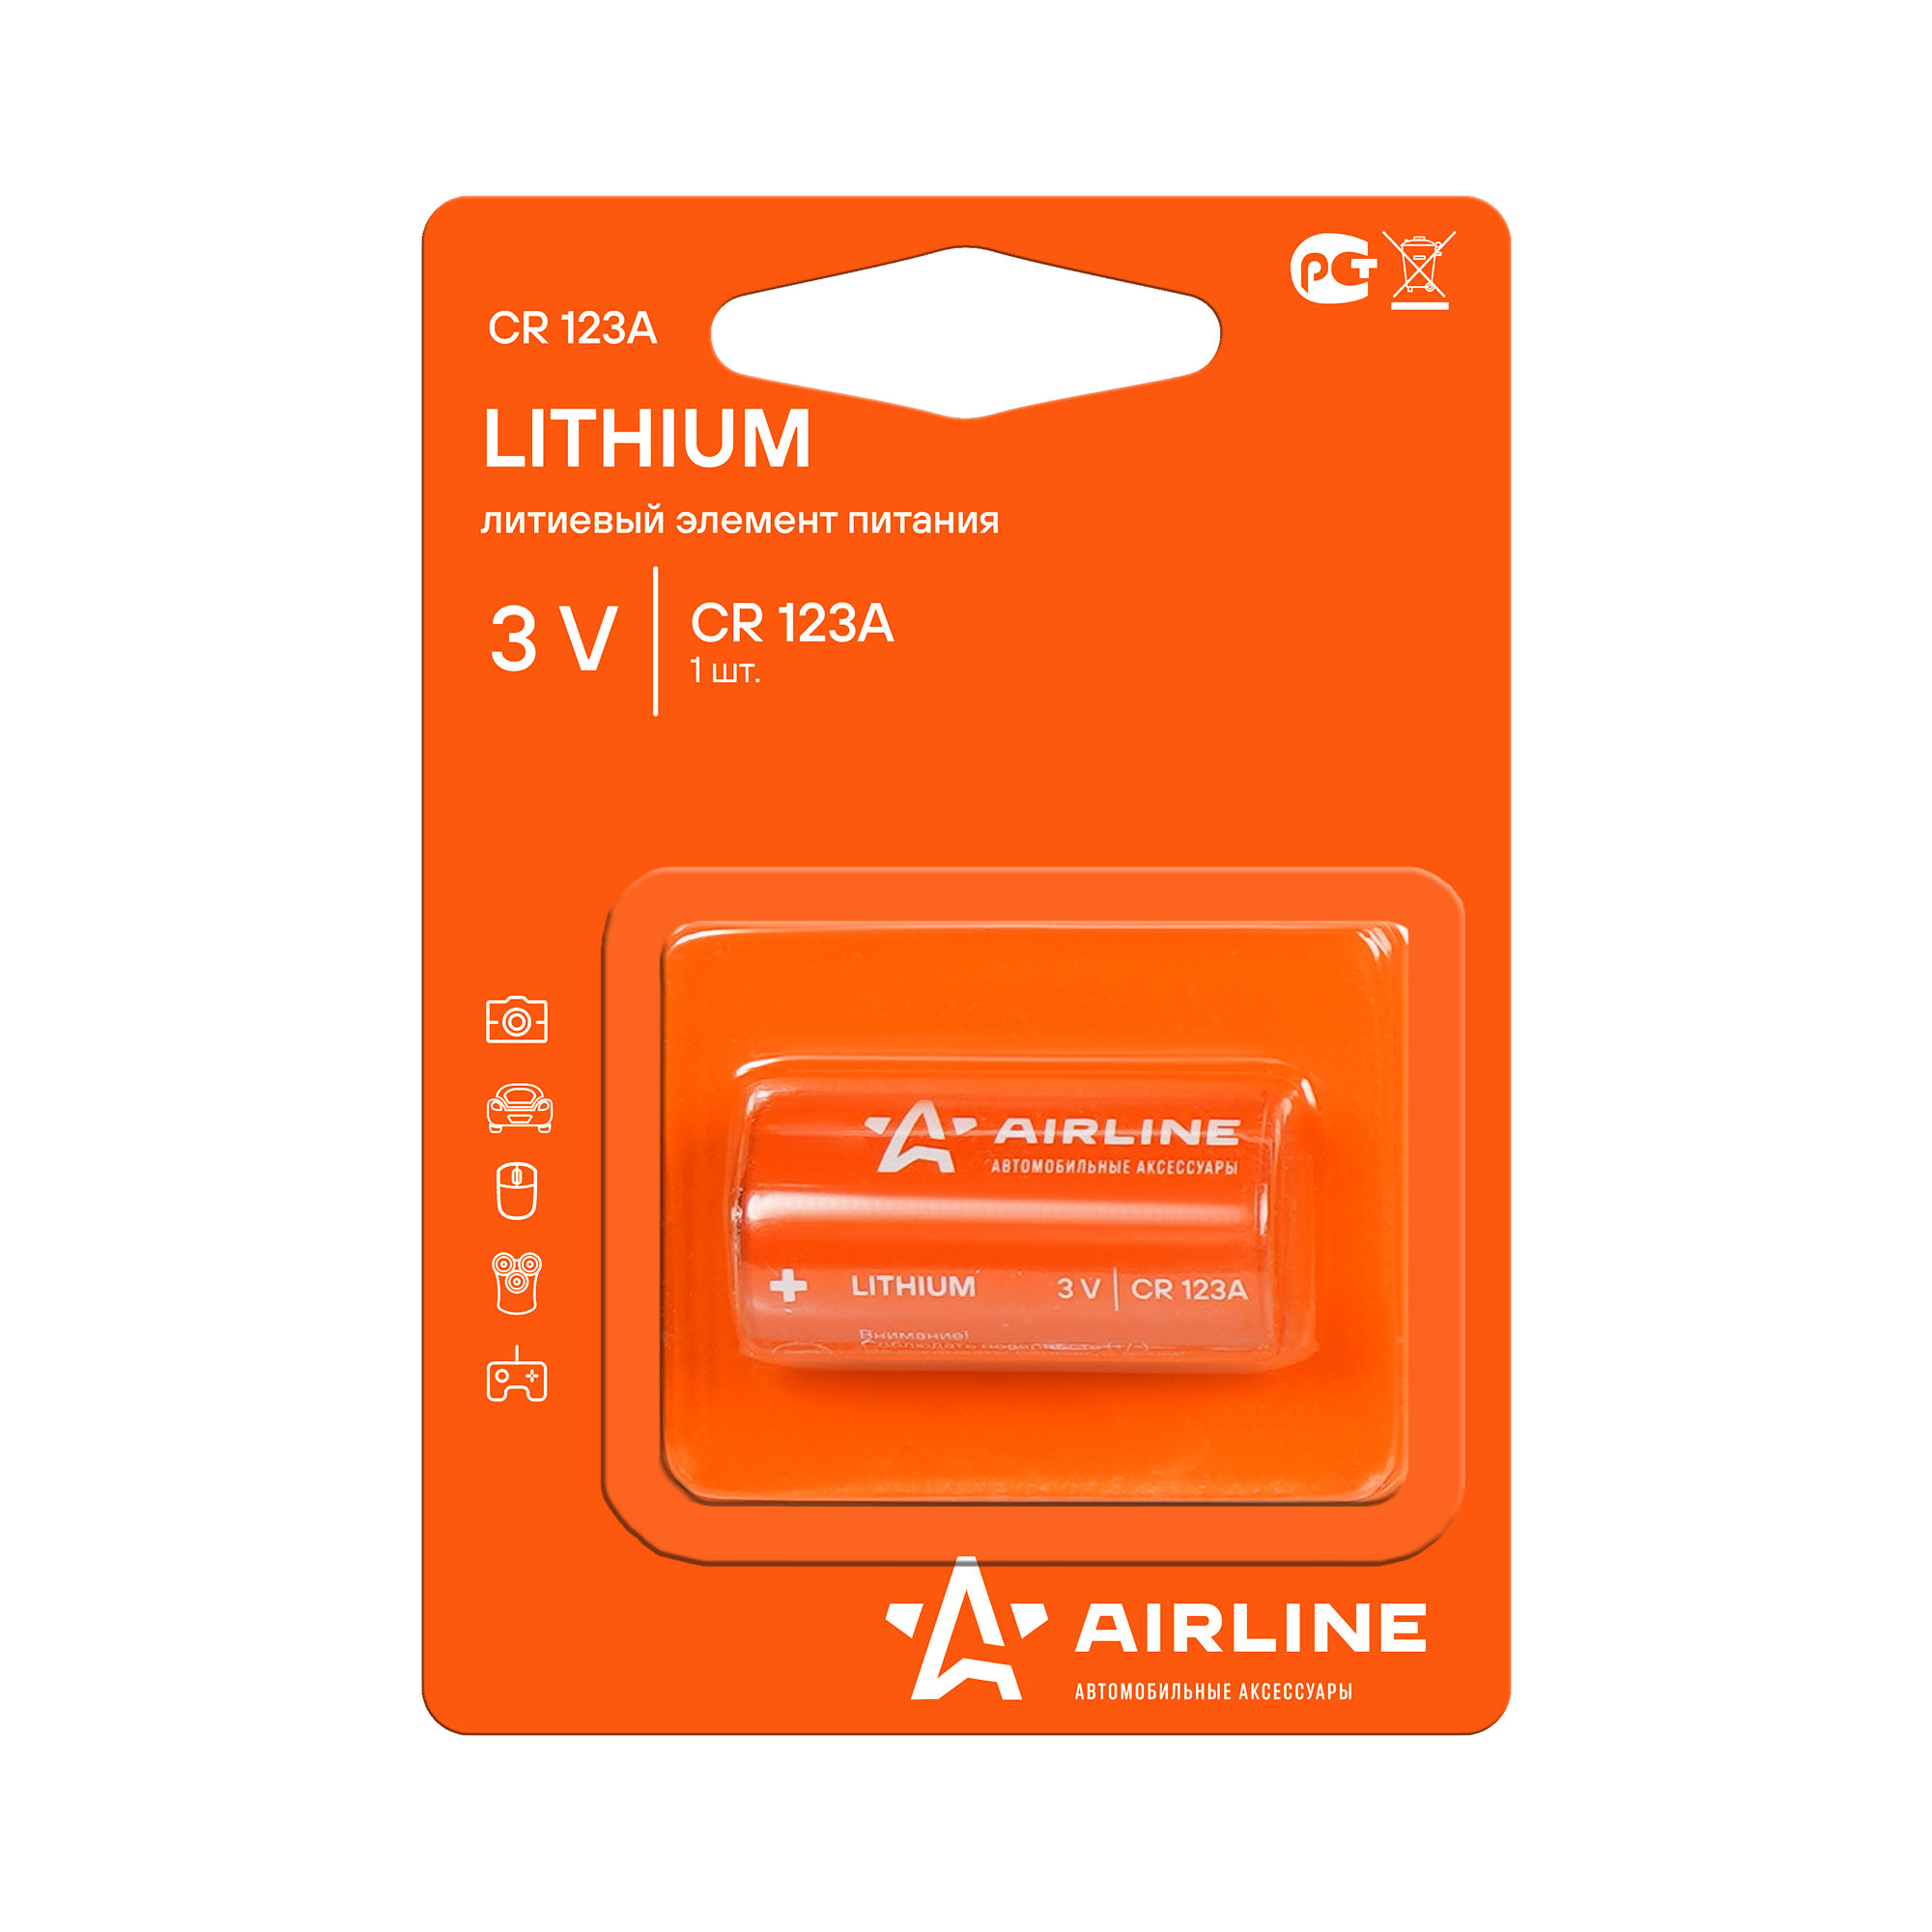 Батарейка литиевая AIRLINE Lithium CR123A 3V упаковка 1 шт. CR123A-01 батарейка литиевая airline lithium cr123a 3v упаковка 1 шт cr123a 01